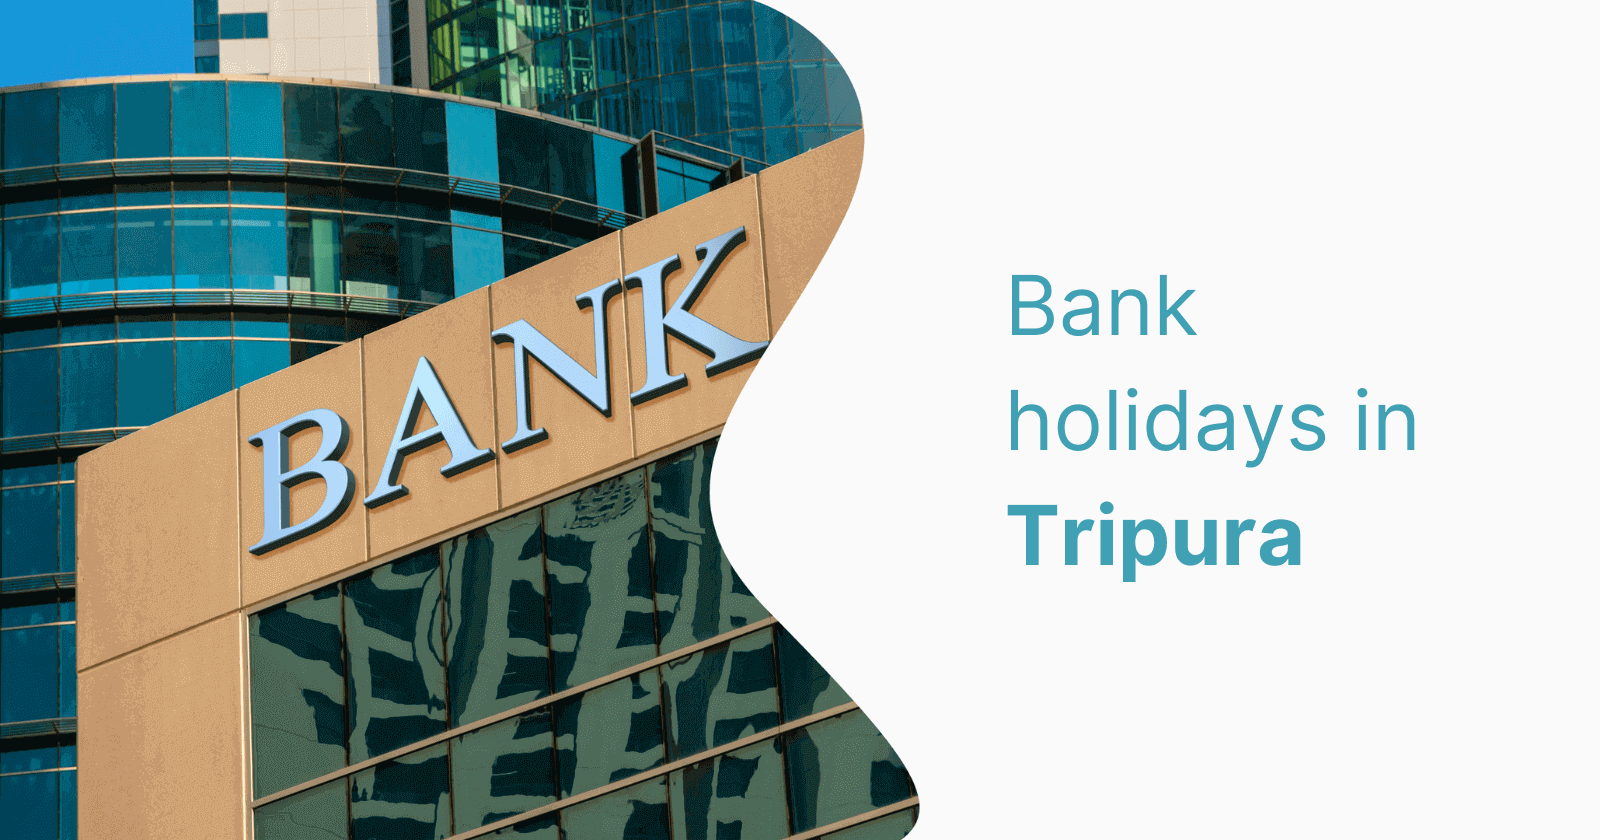 Tripura Holidays: List of Bank Holidays in Tripura in 2023